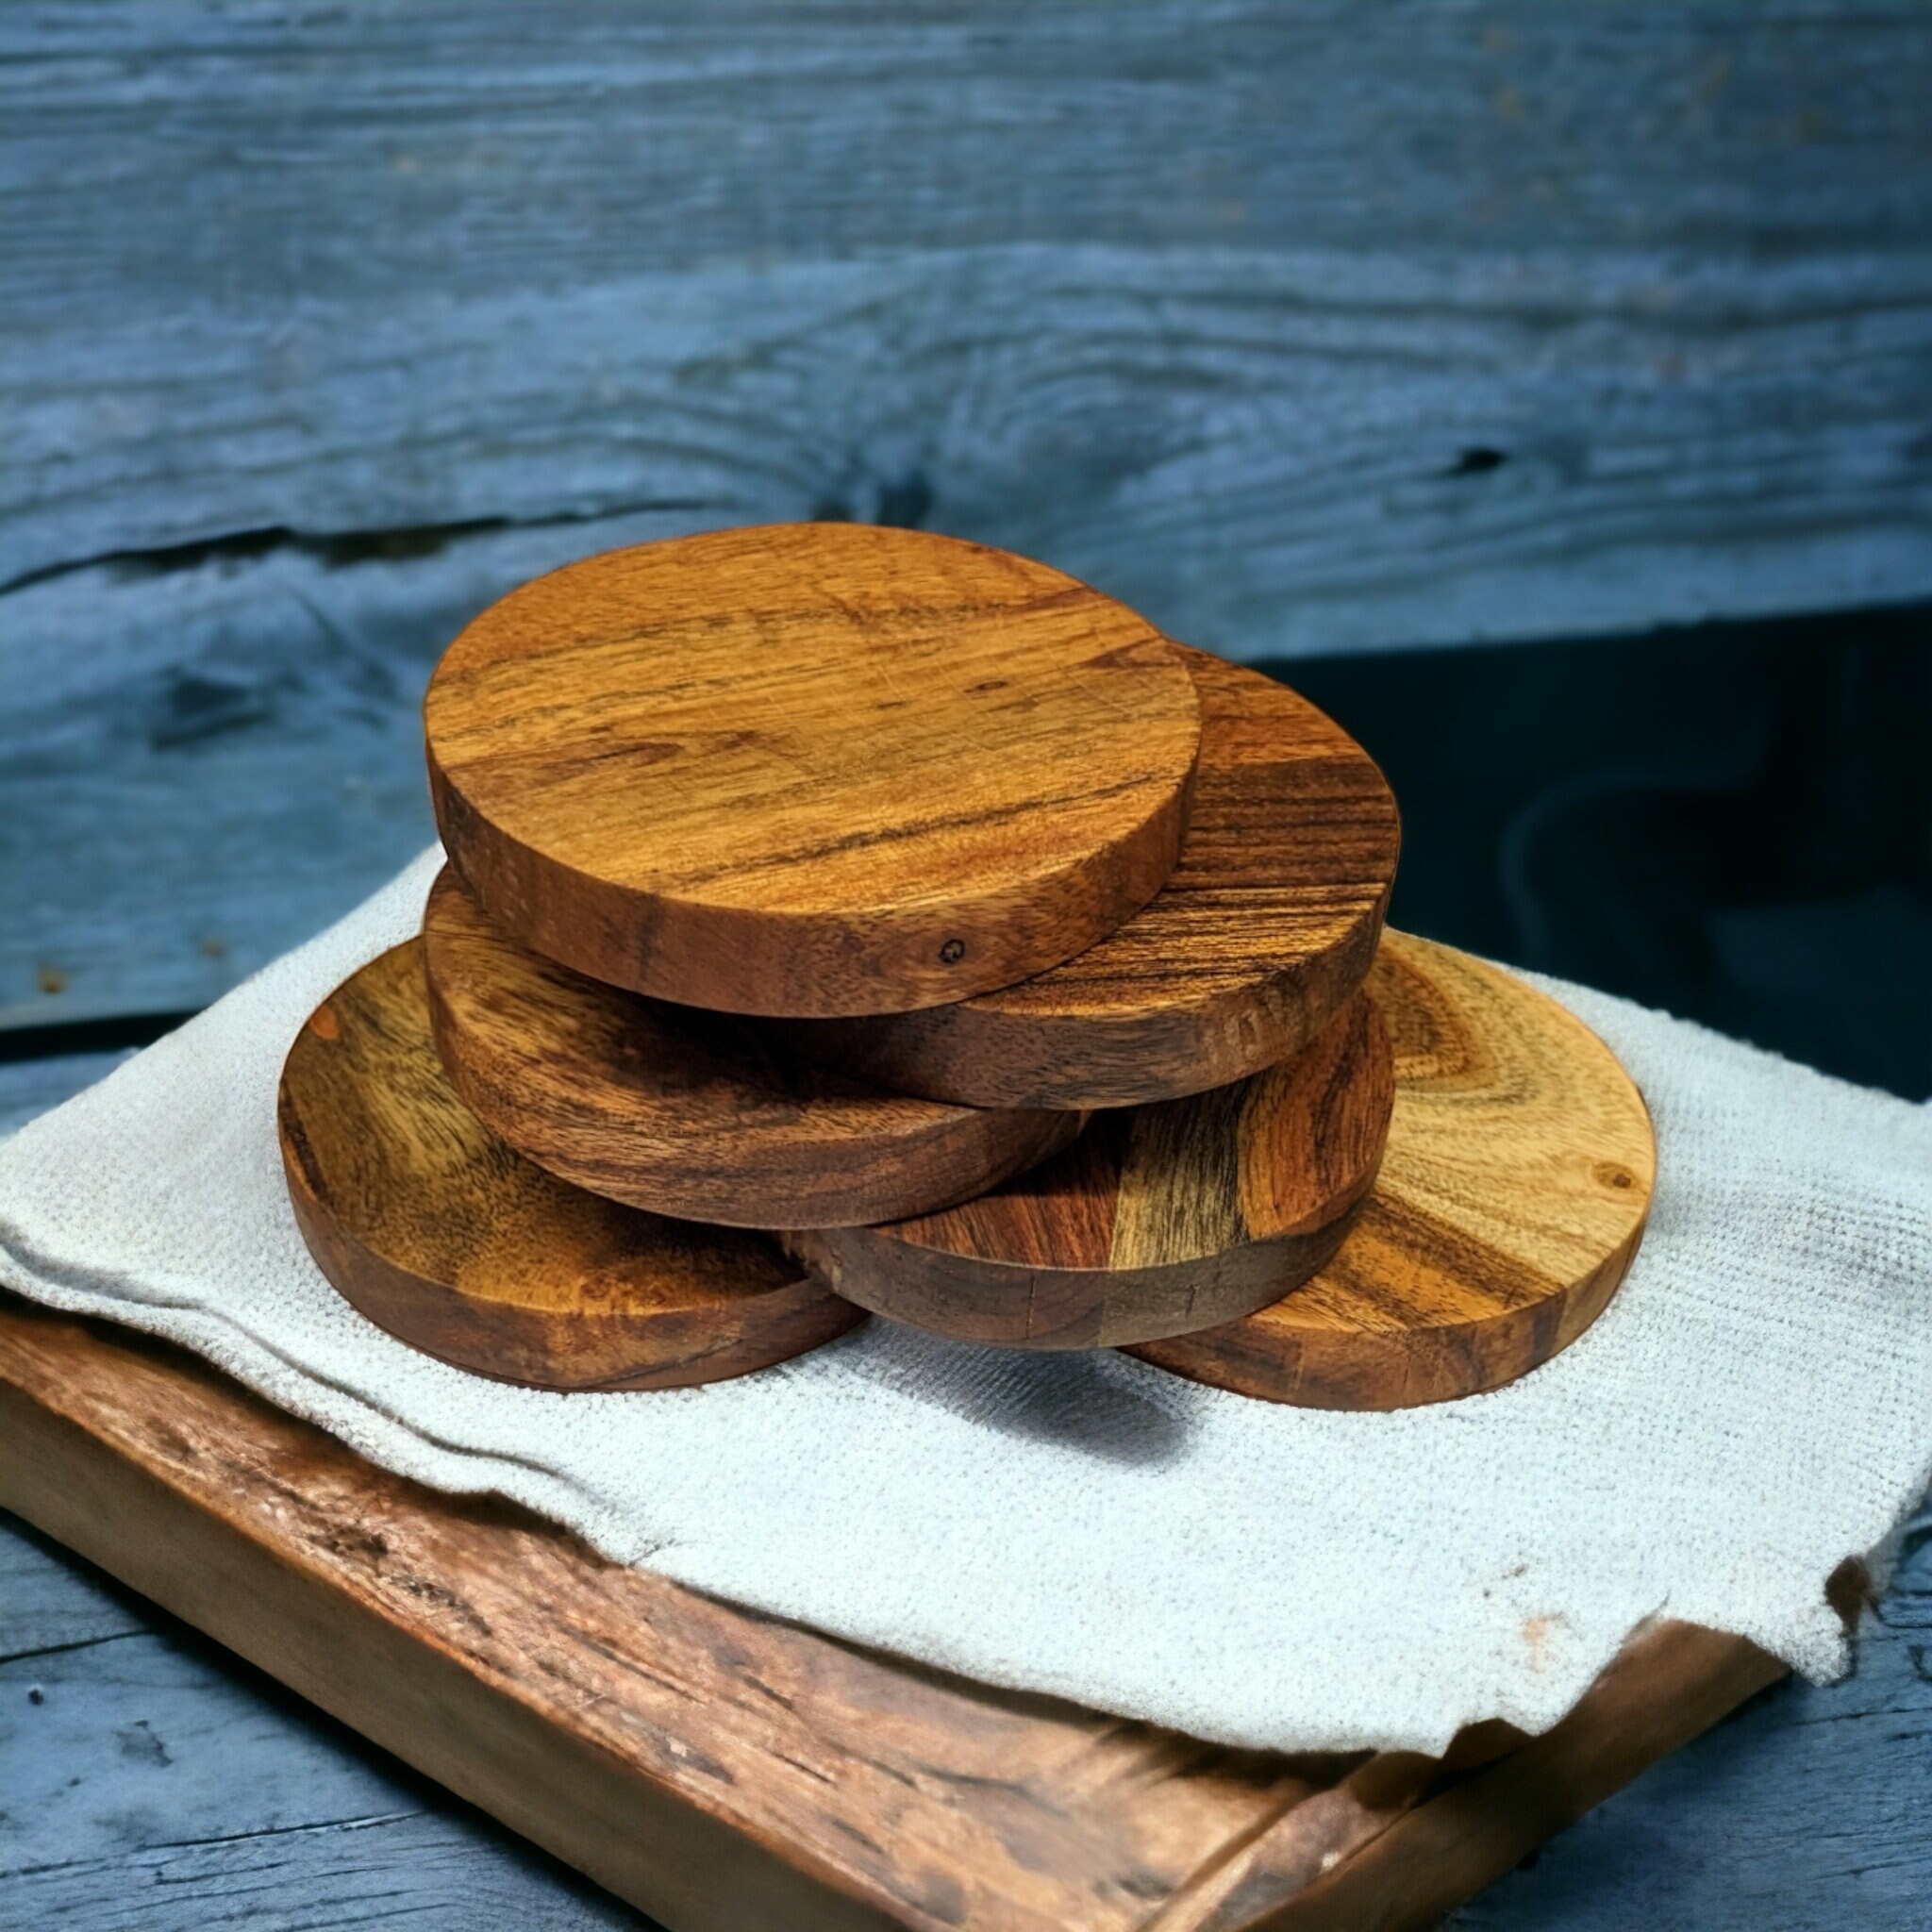 10x round wooden discs / branch discs DIY olive wood approx. Ø 3 cm